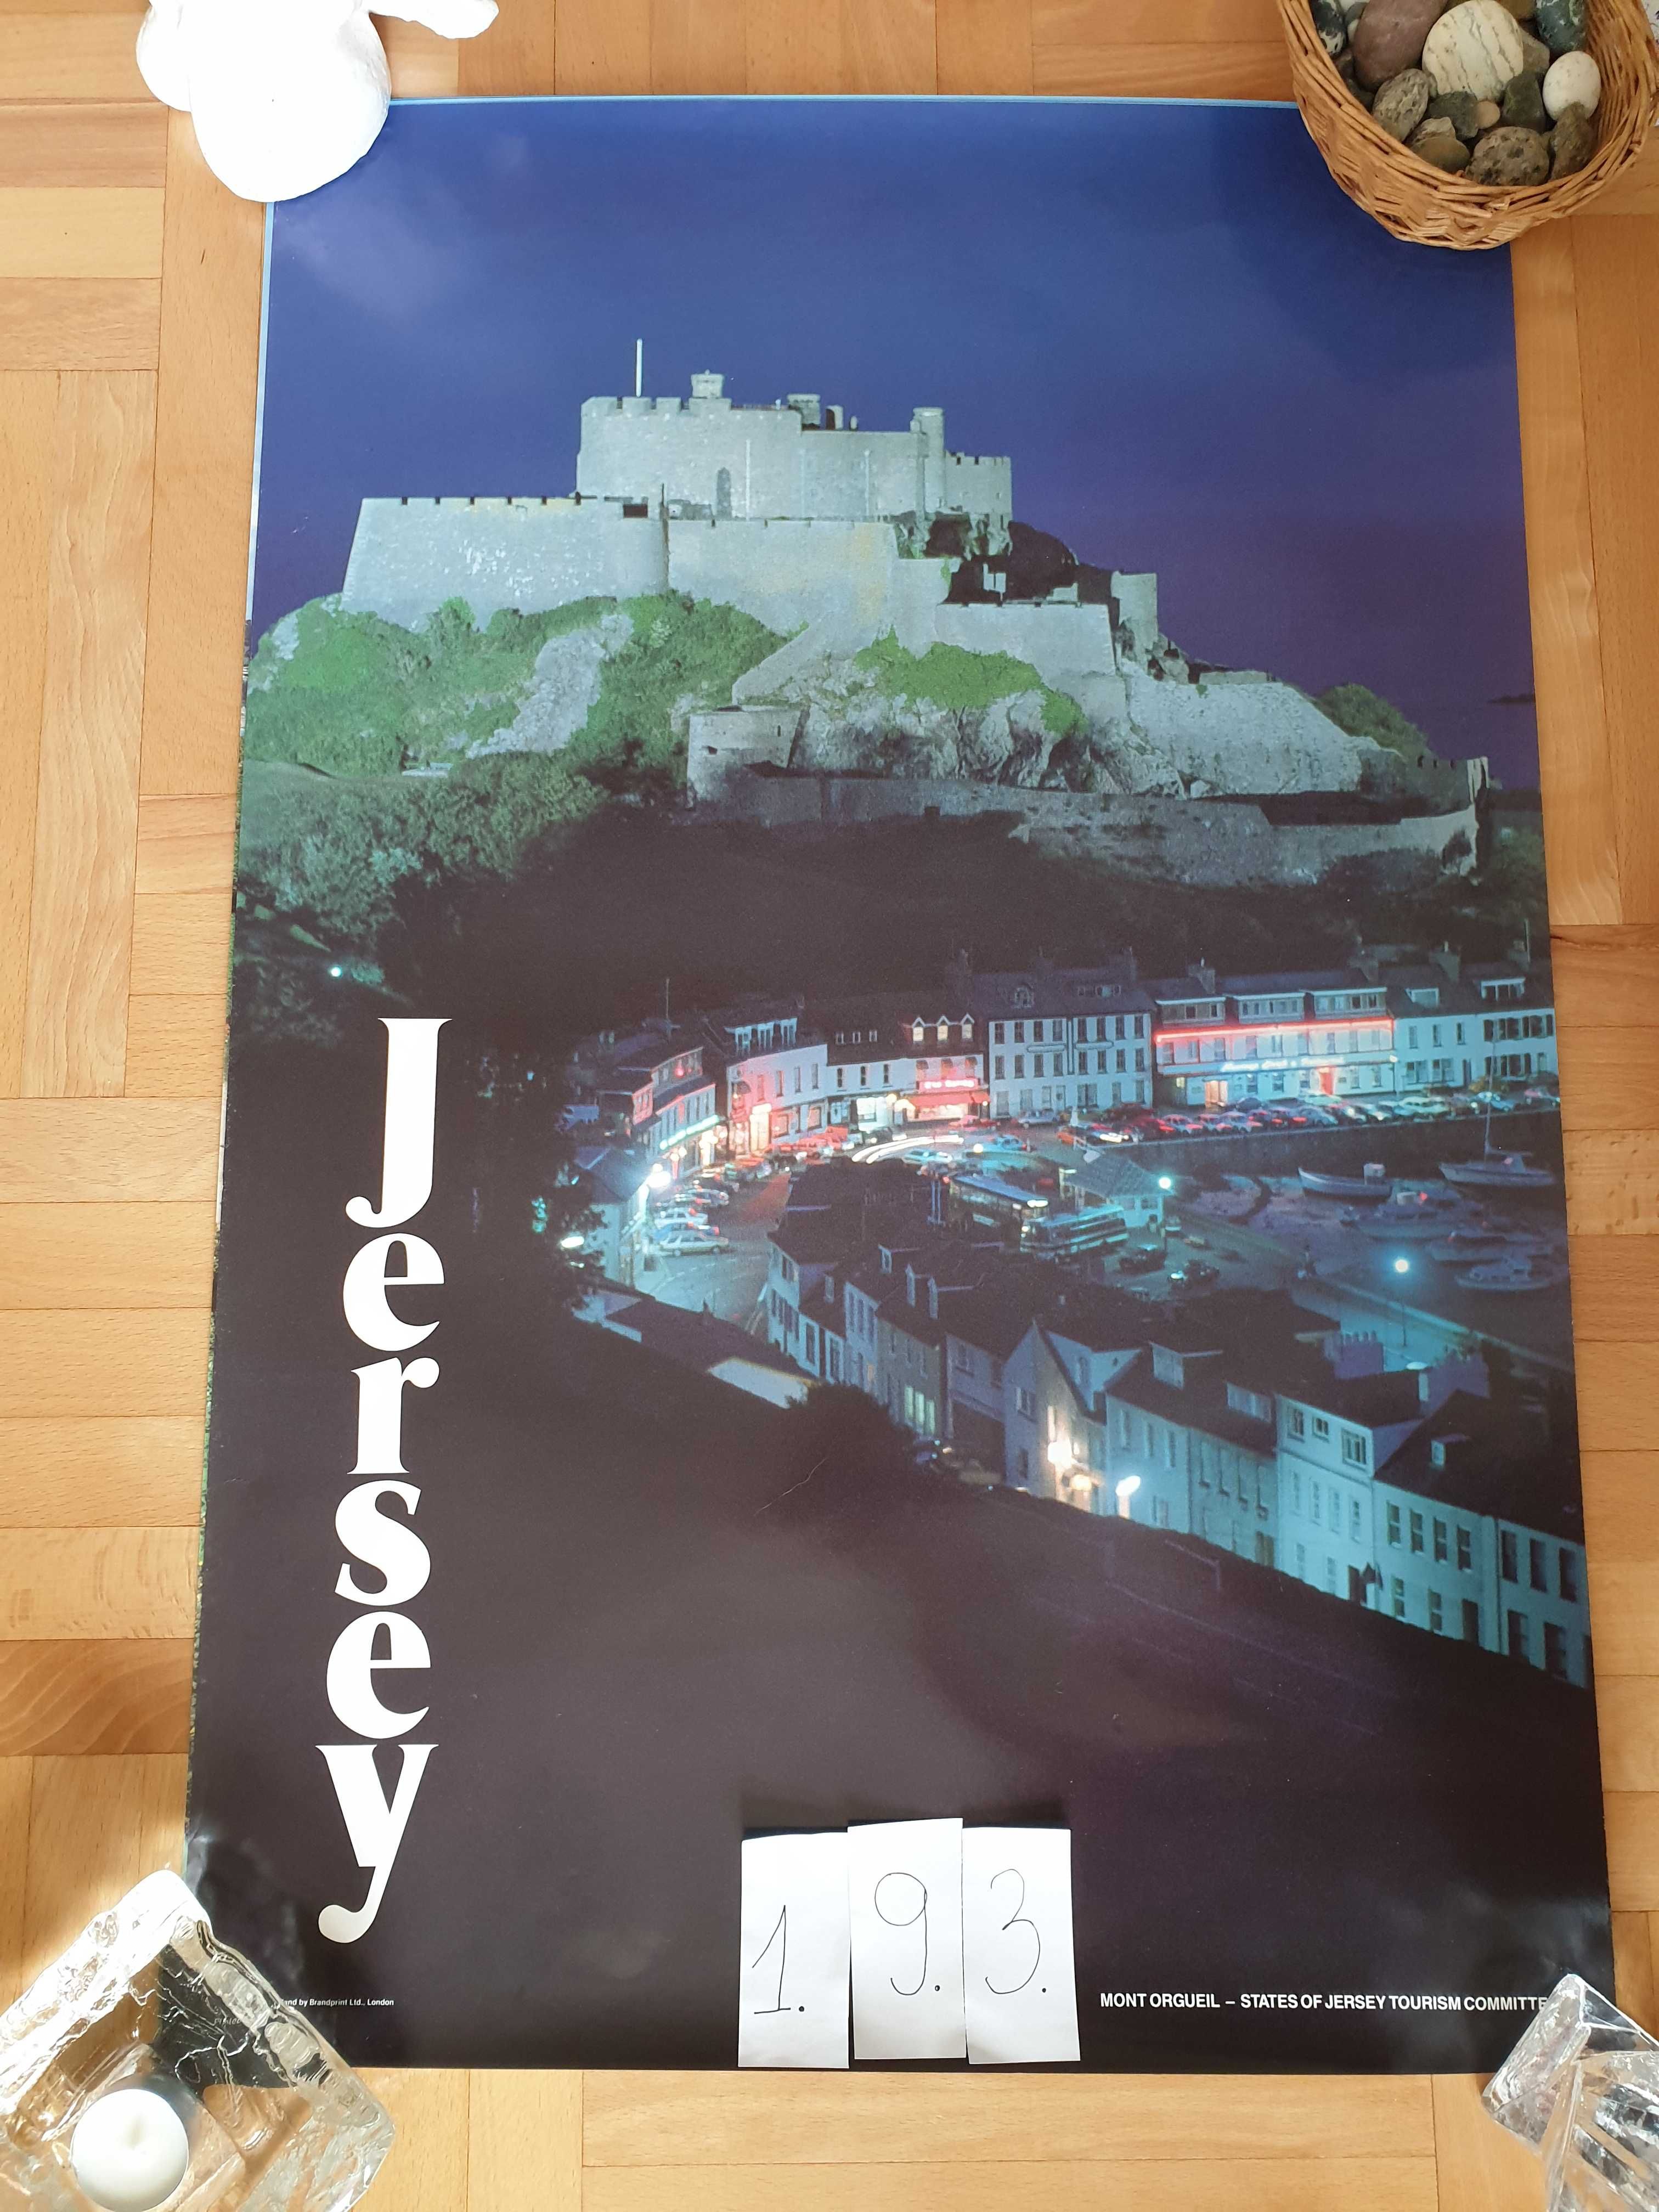 4x plakat Jersey, komplet wyspa Jersey, wielka Brytania, Anglia